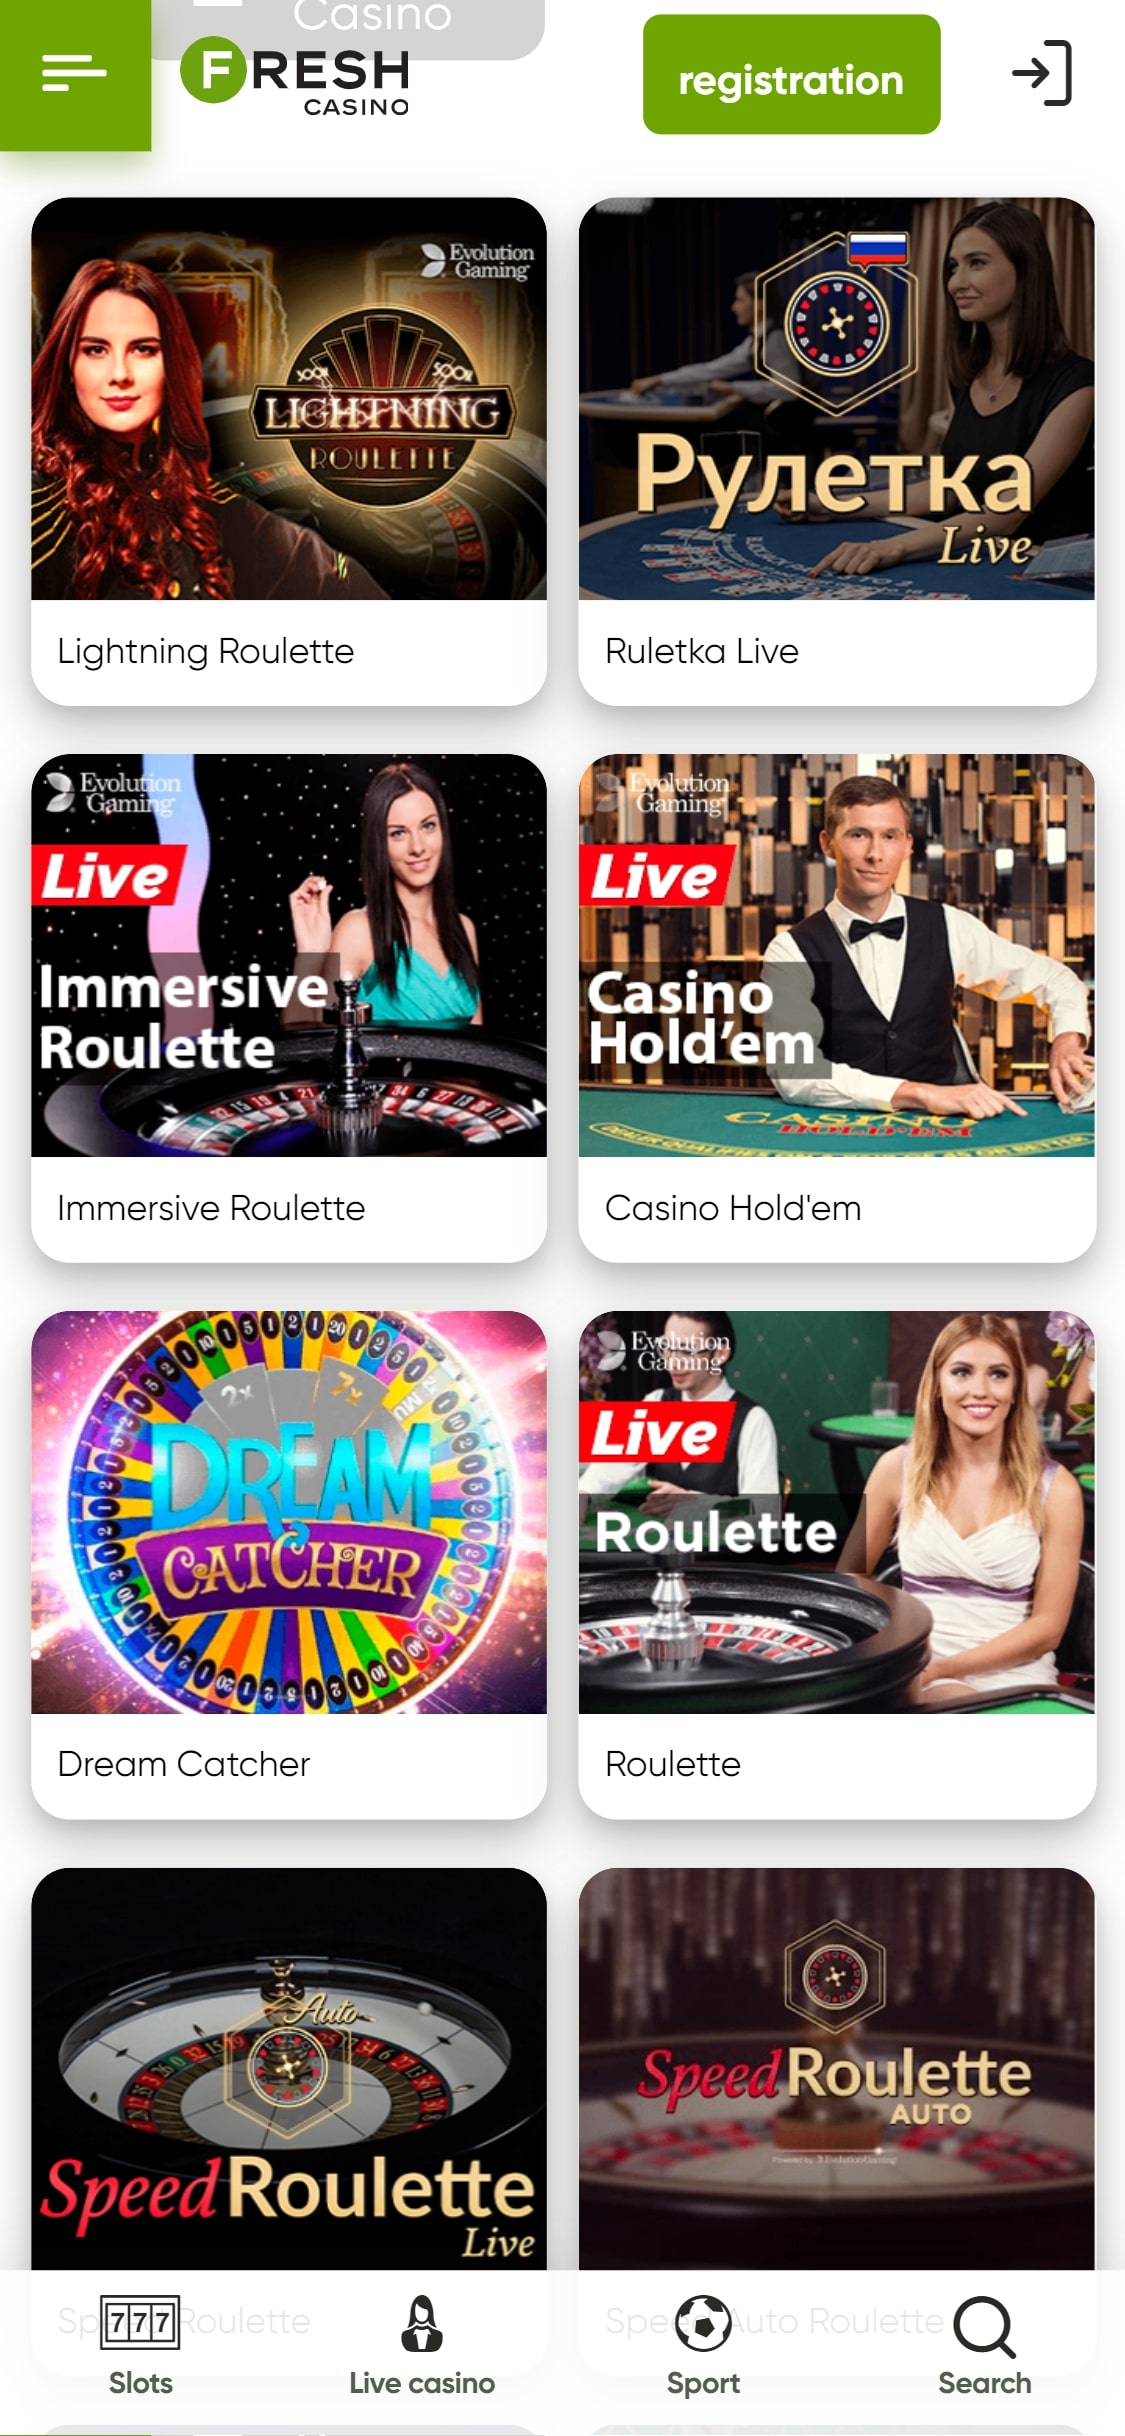 Fresh Casino Mobile Live Dealer Games Review